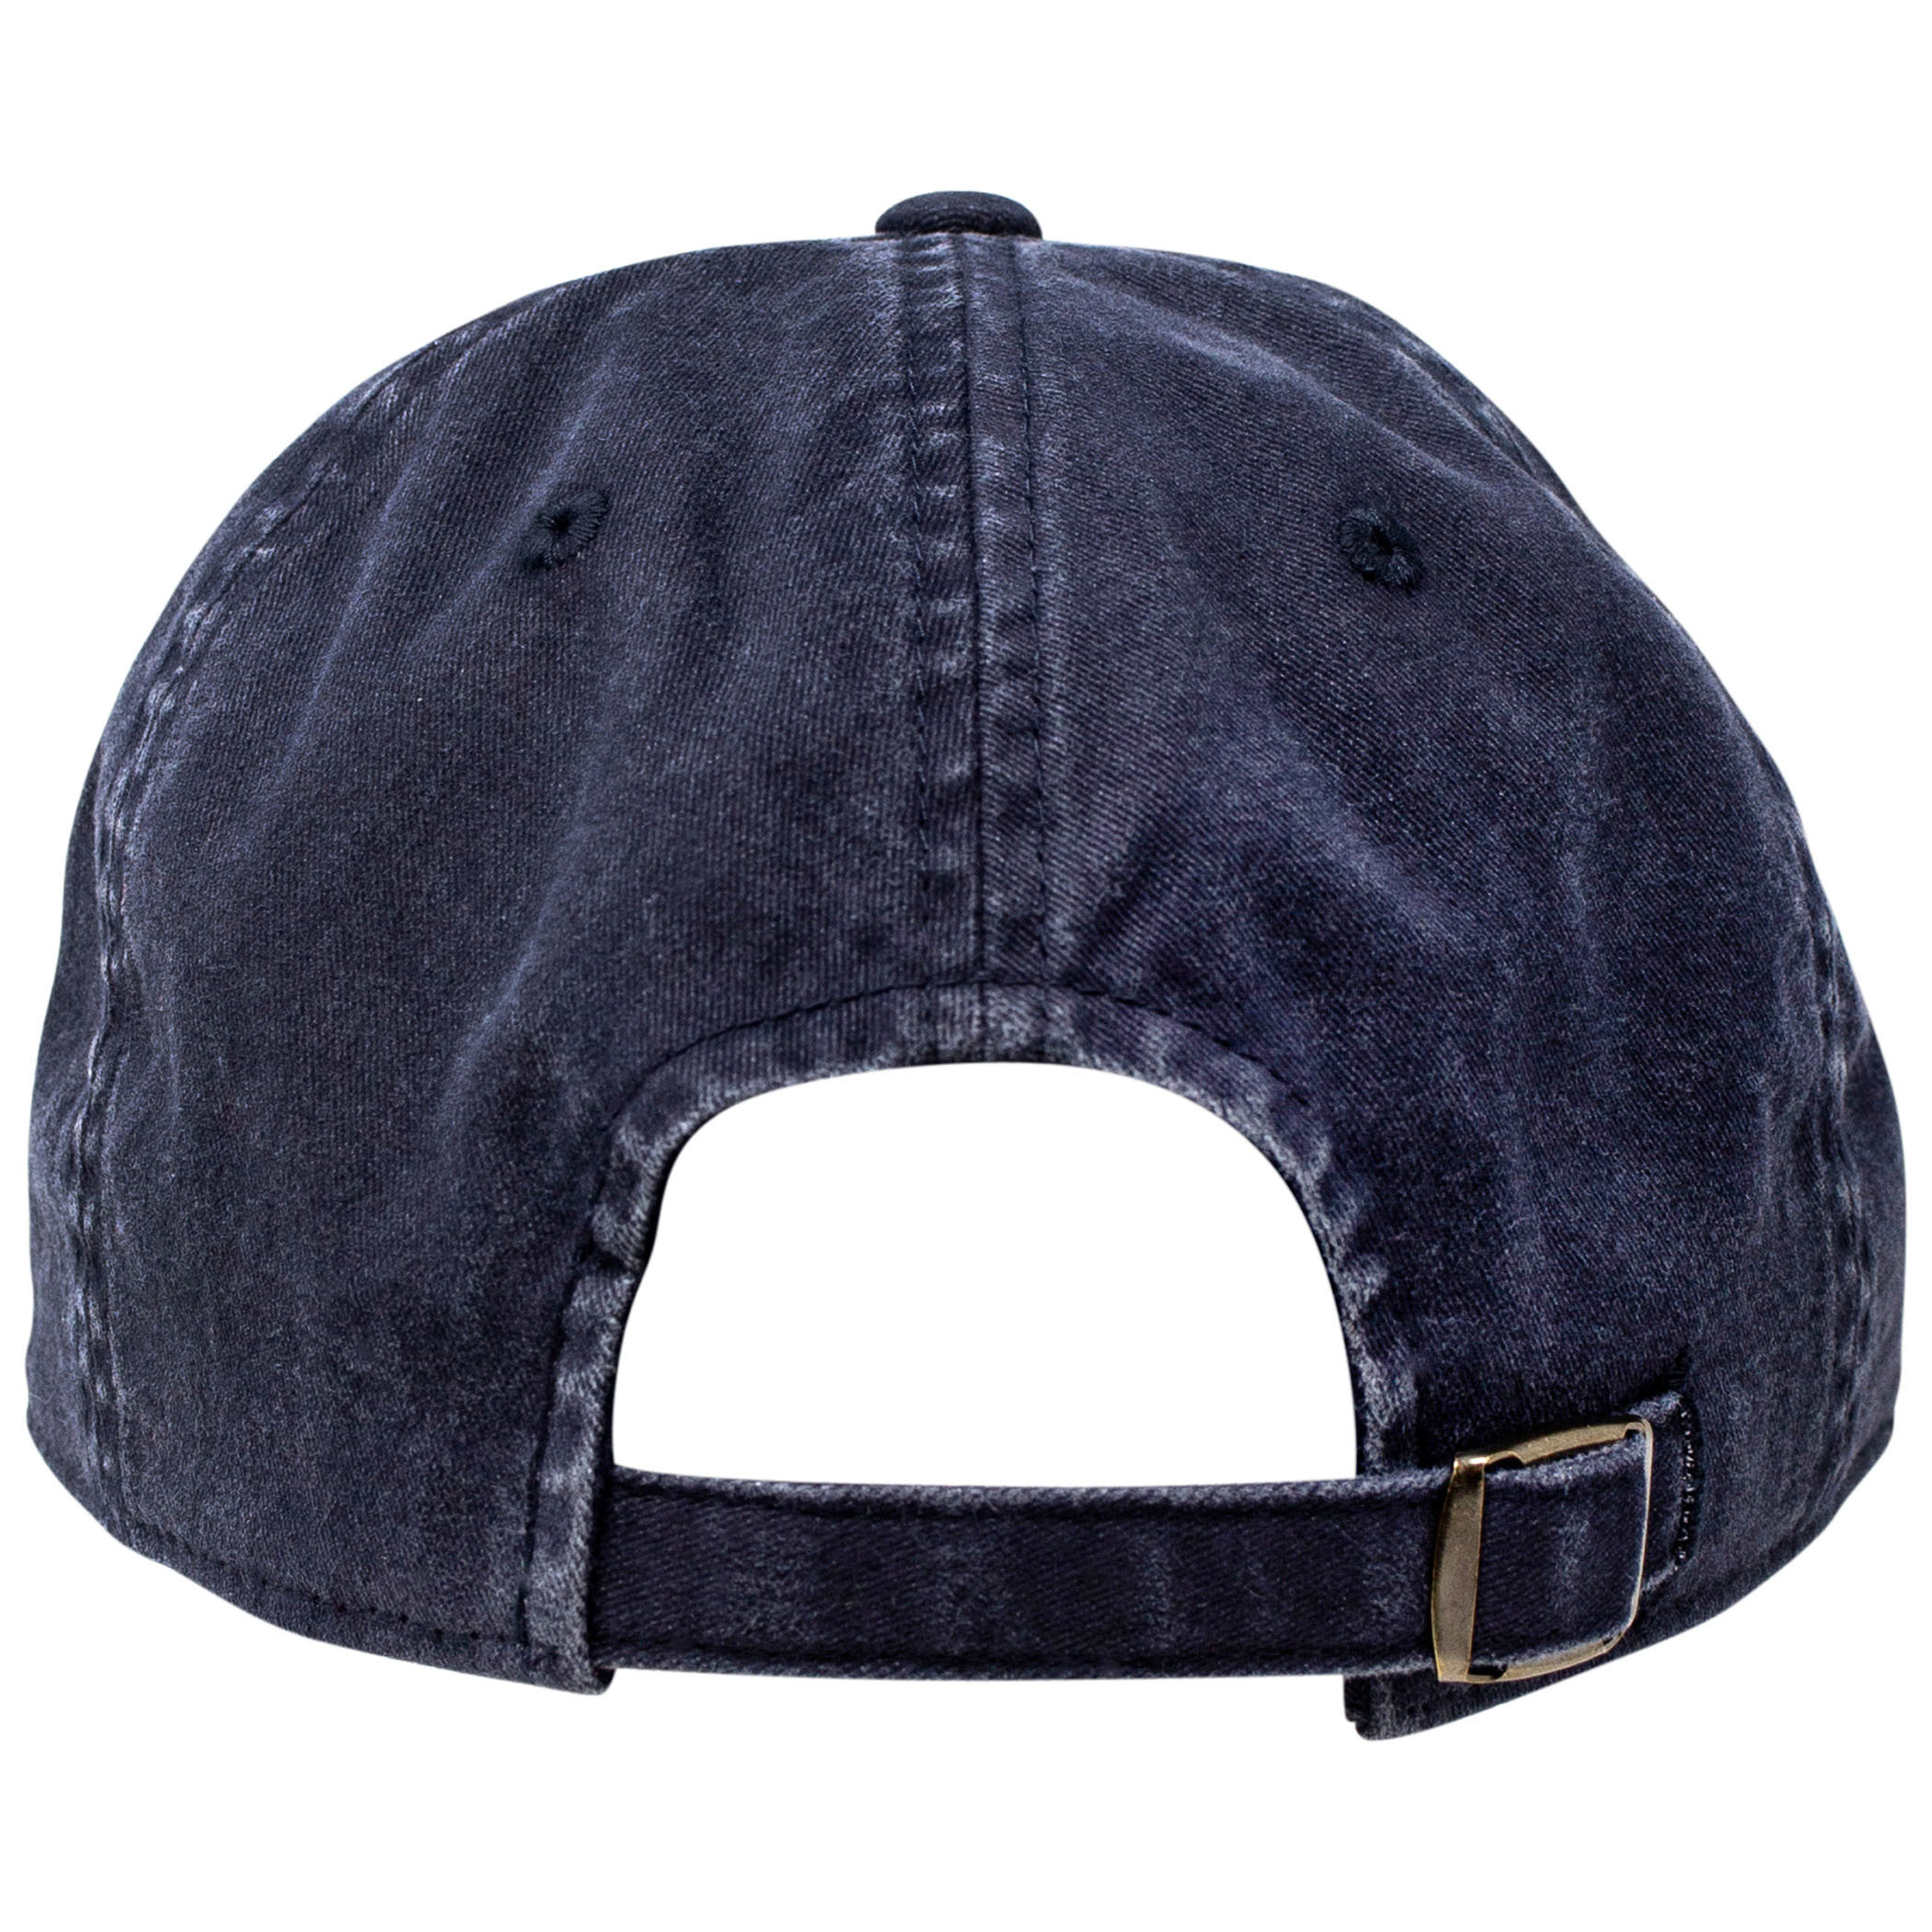 Hamm's Underside Brim Bear Strapback Hat